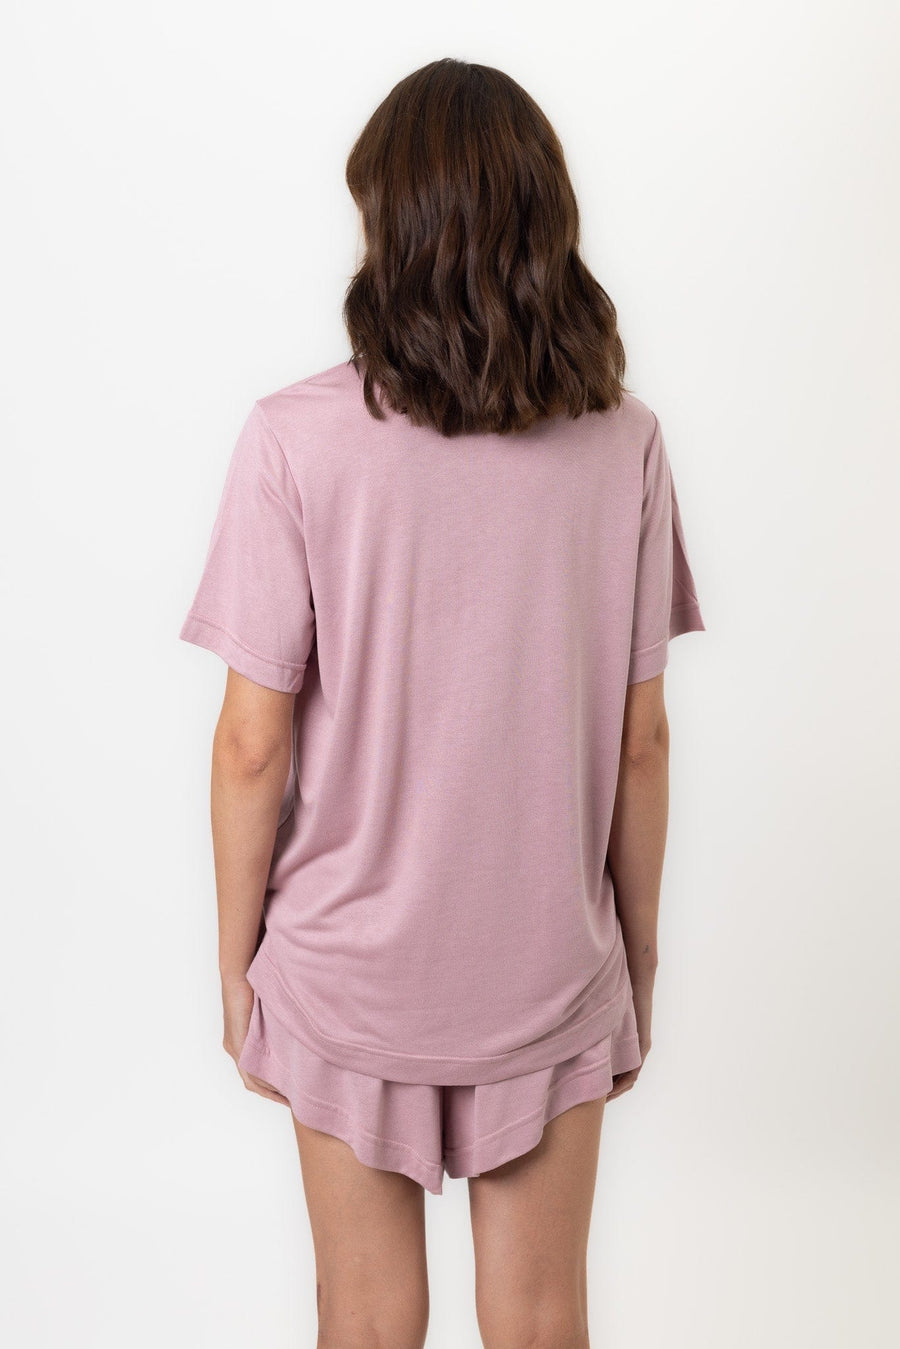 Opulent Short | Blush Pink Opulent Short Lounge Shorts Pajamas Australia Online | Reverie the Label  SHORTS Opulent Short